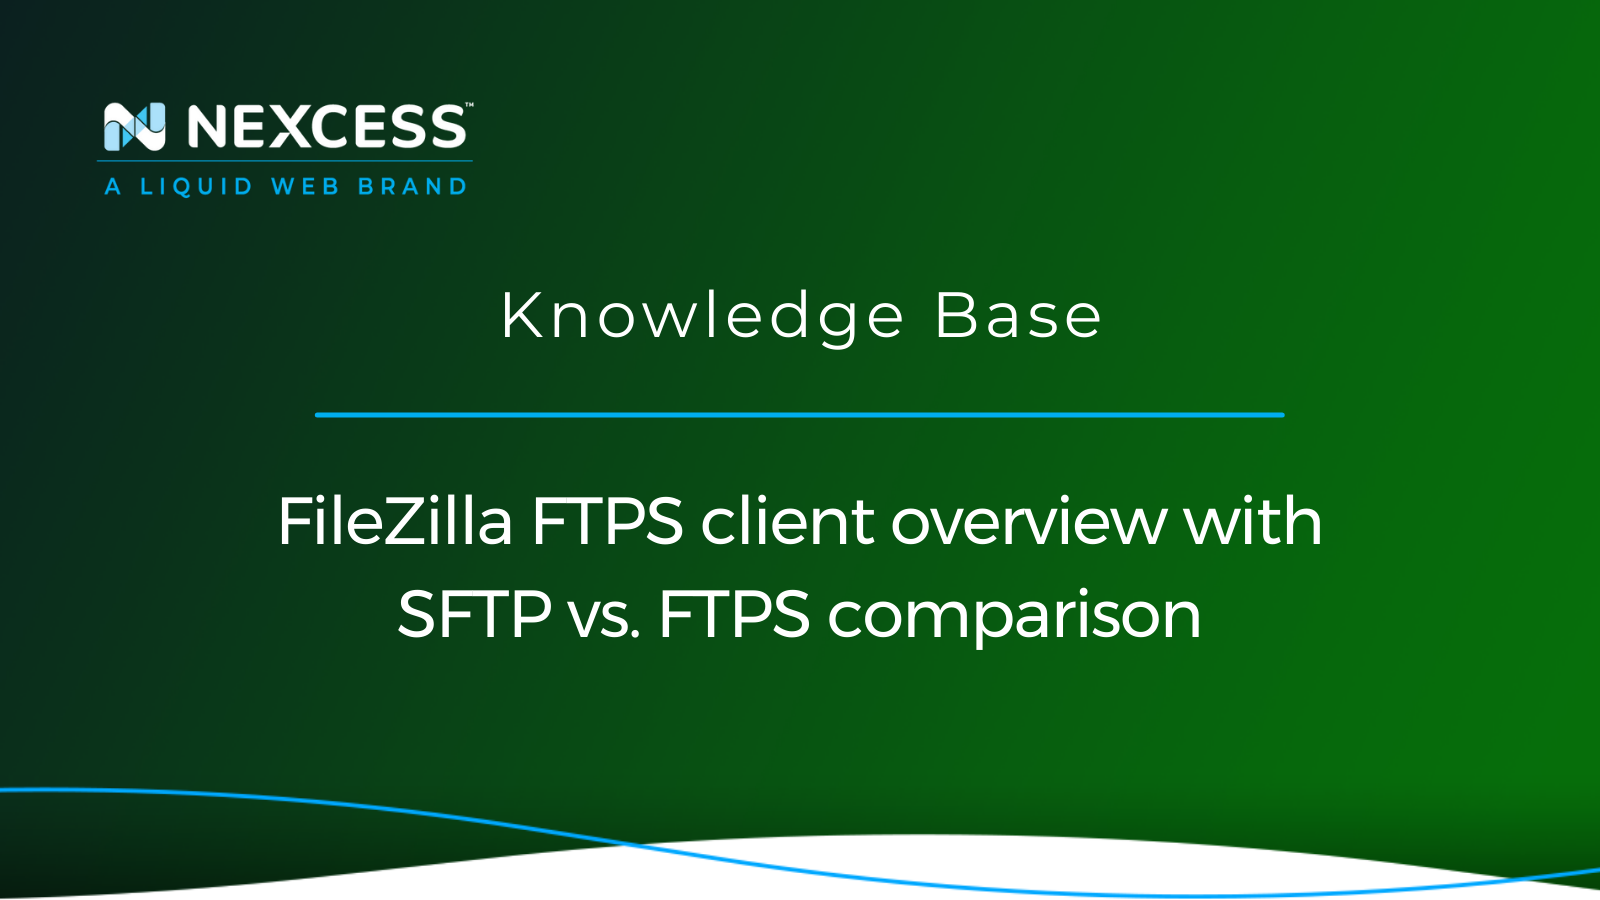 FileZilla FTPS client overview with SFTP vs. FTPS comparison